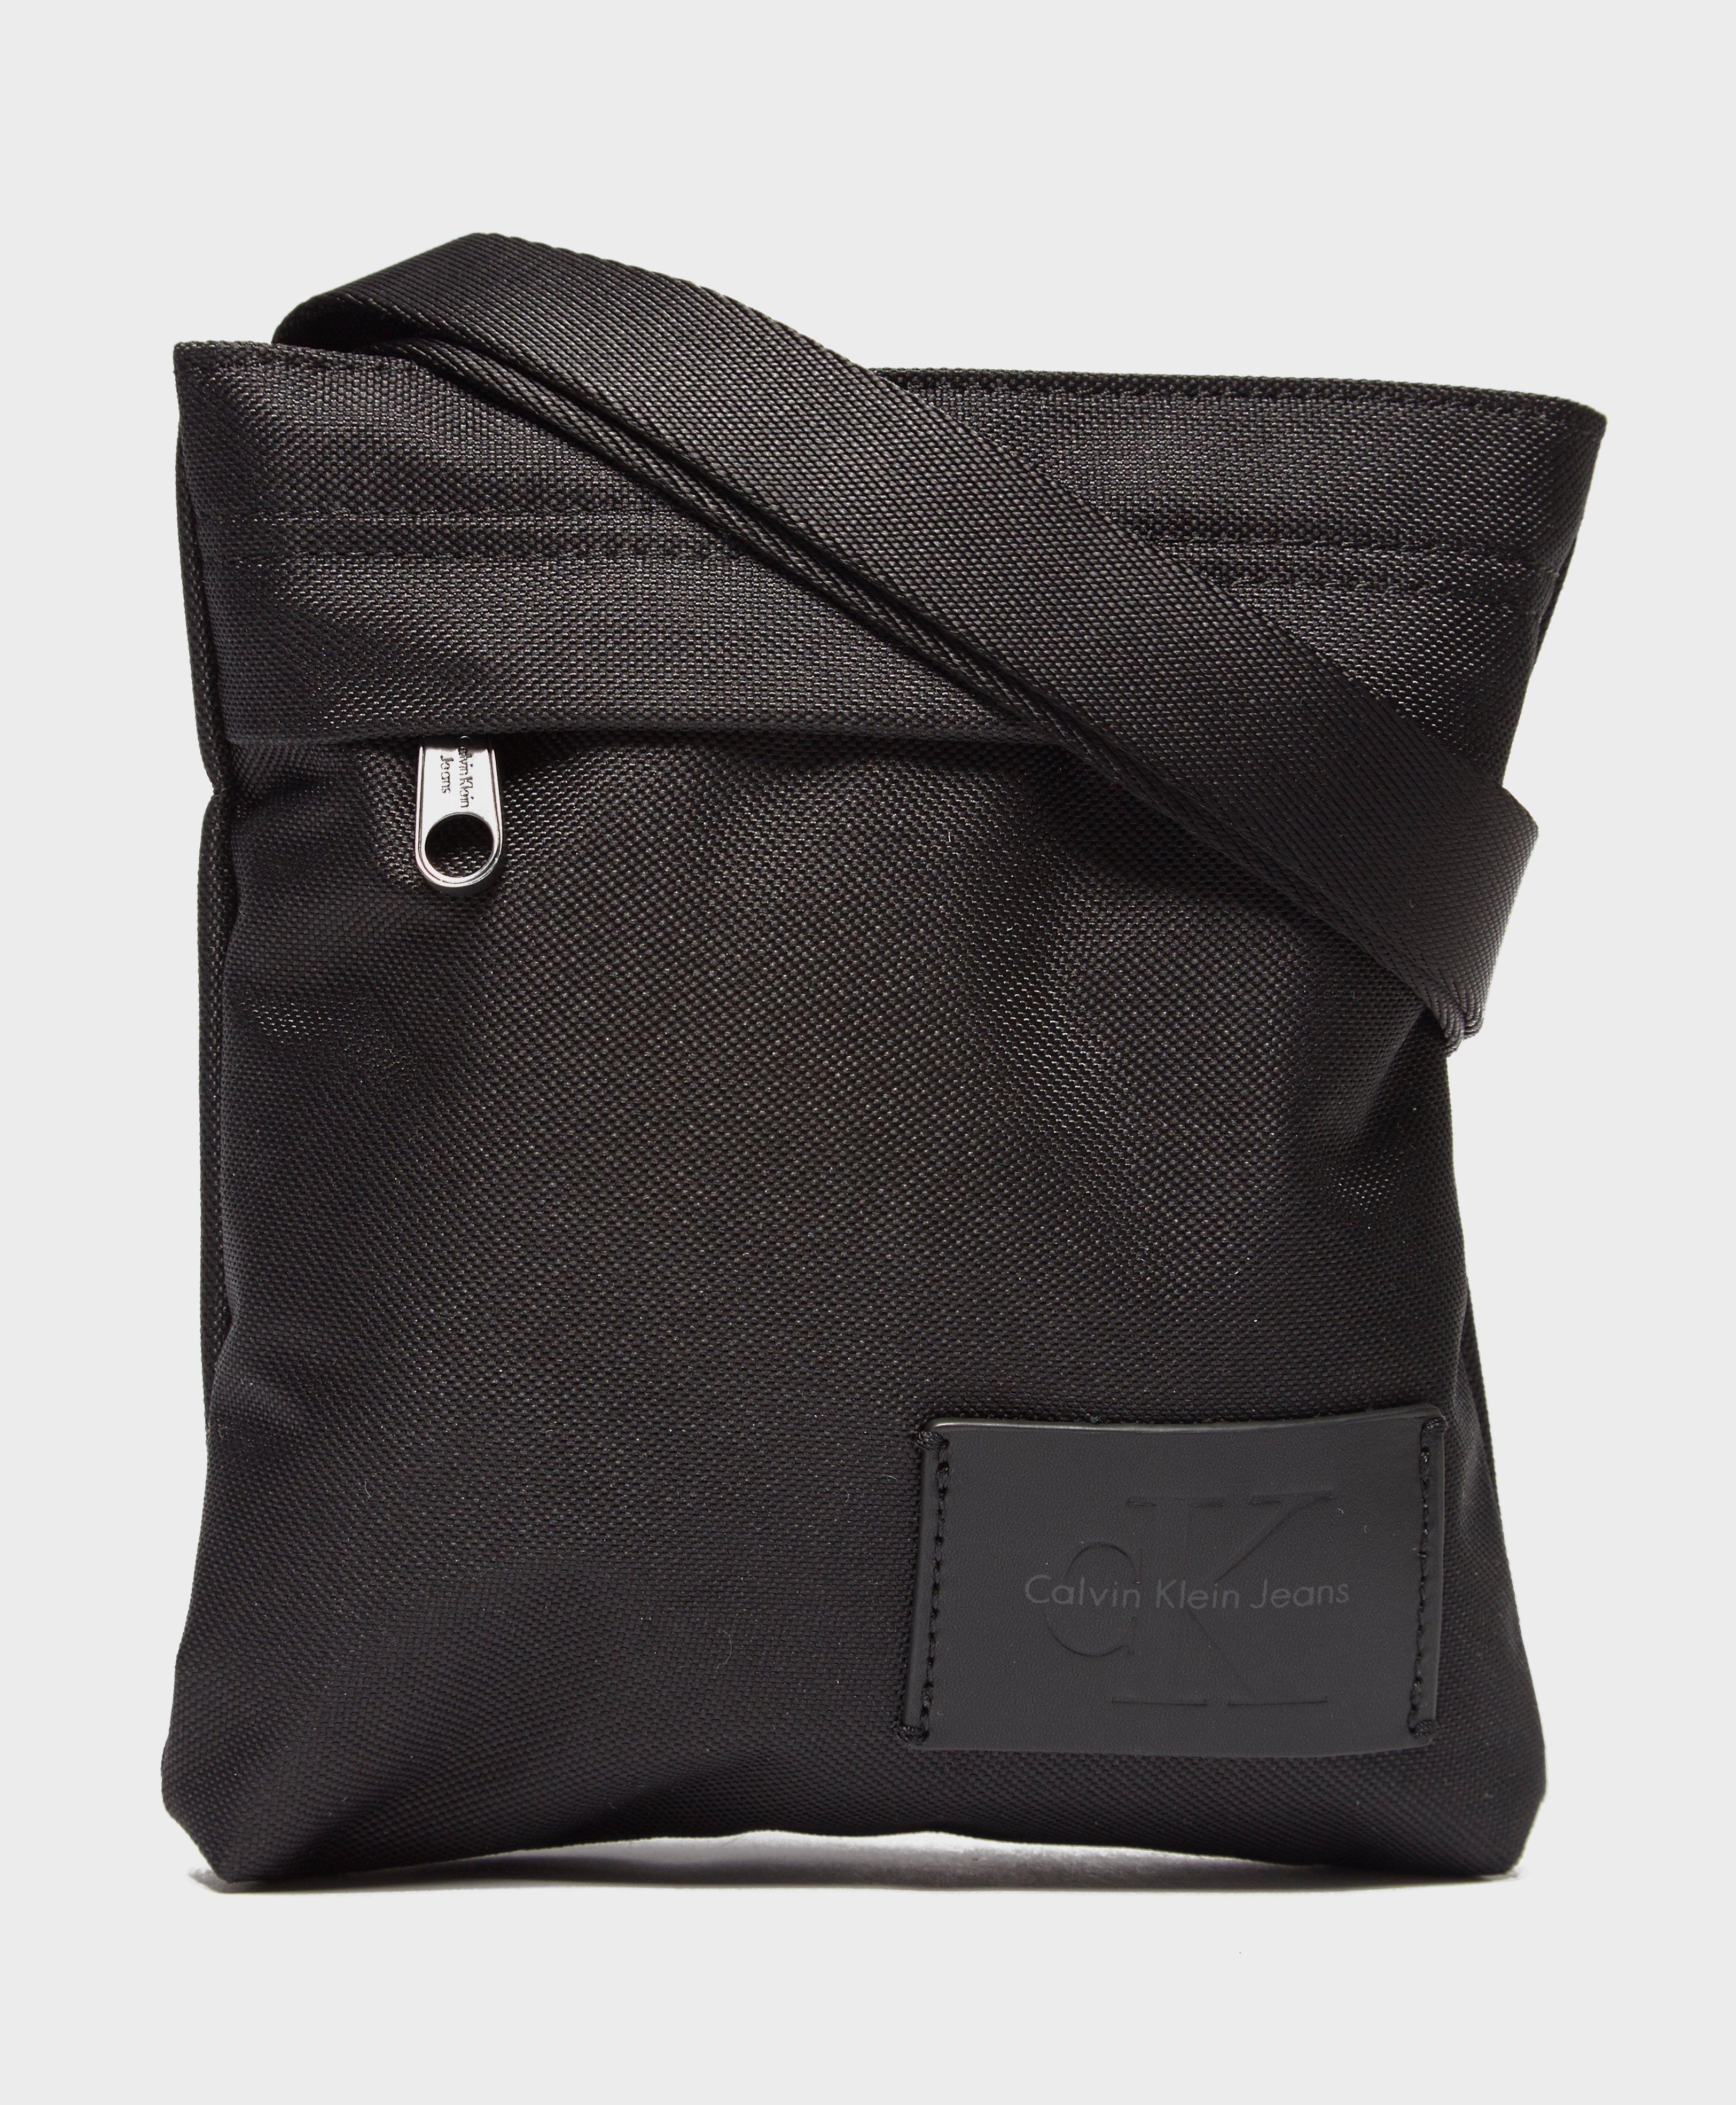 Calvin Klein Synthetic Essential Mini Bag in Black for Men - Lyst